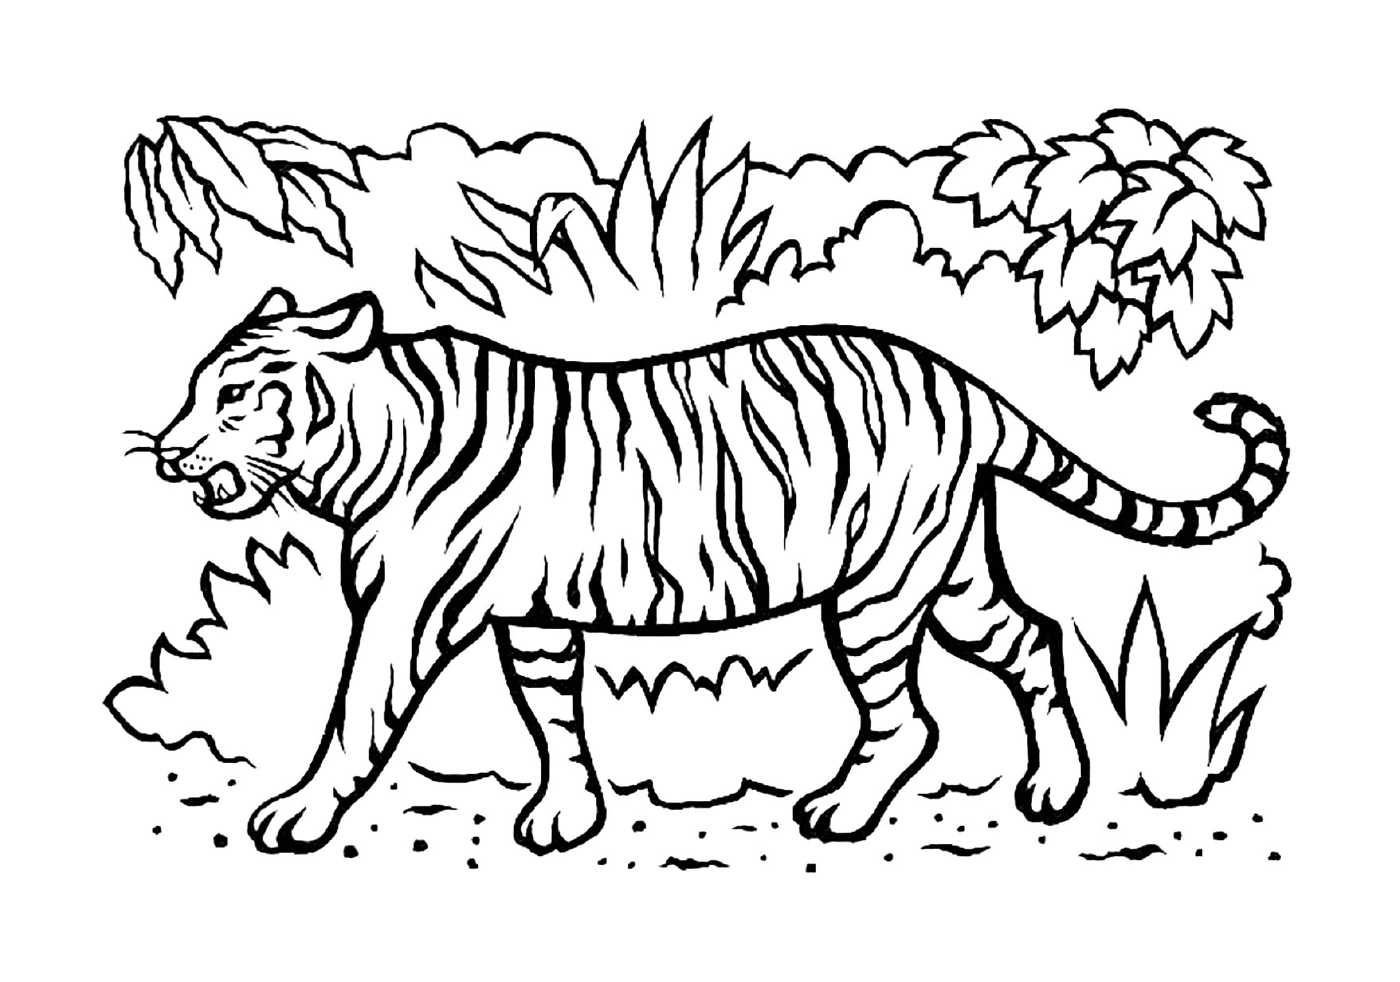  एक खूबसूरत बाघ 